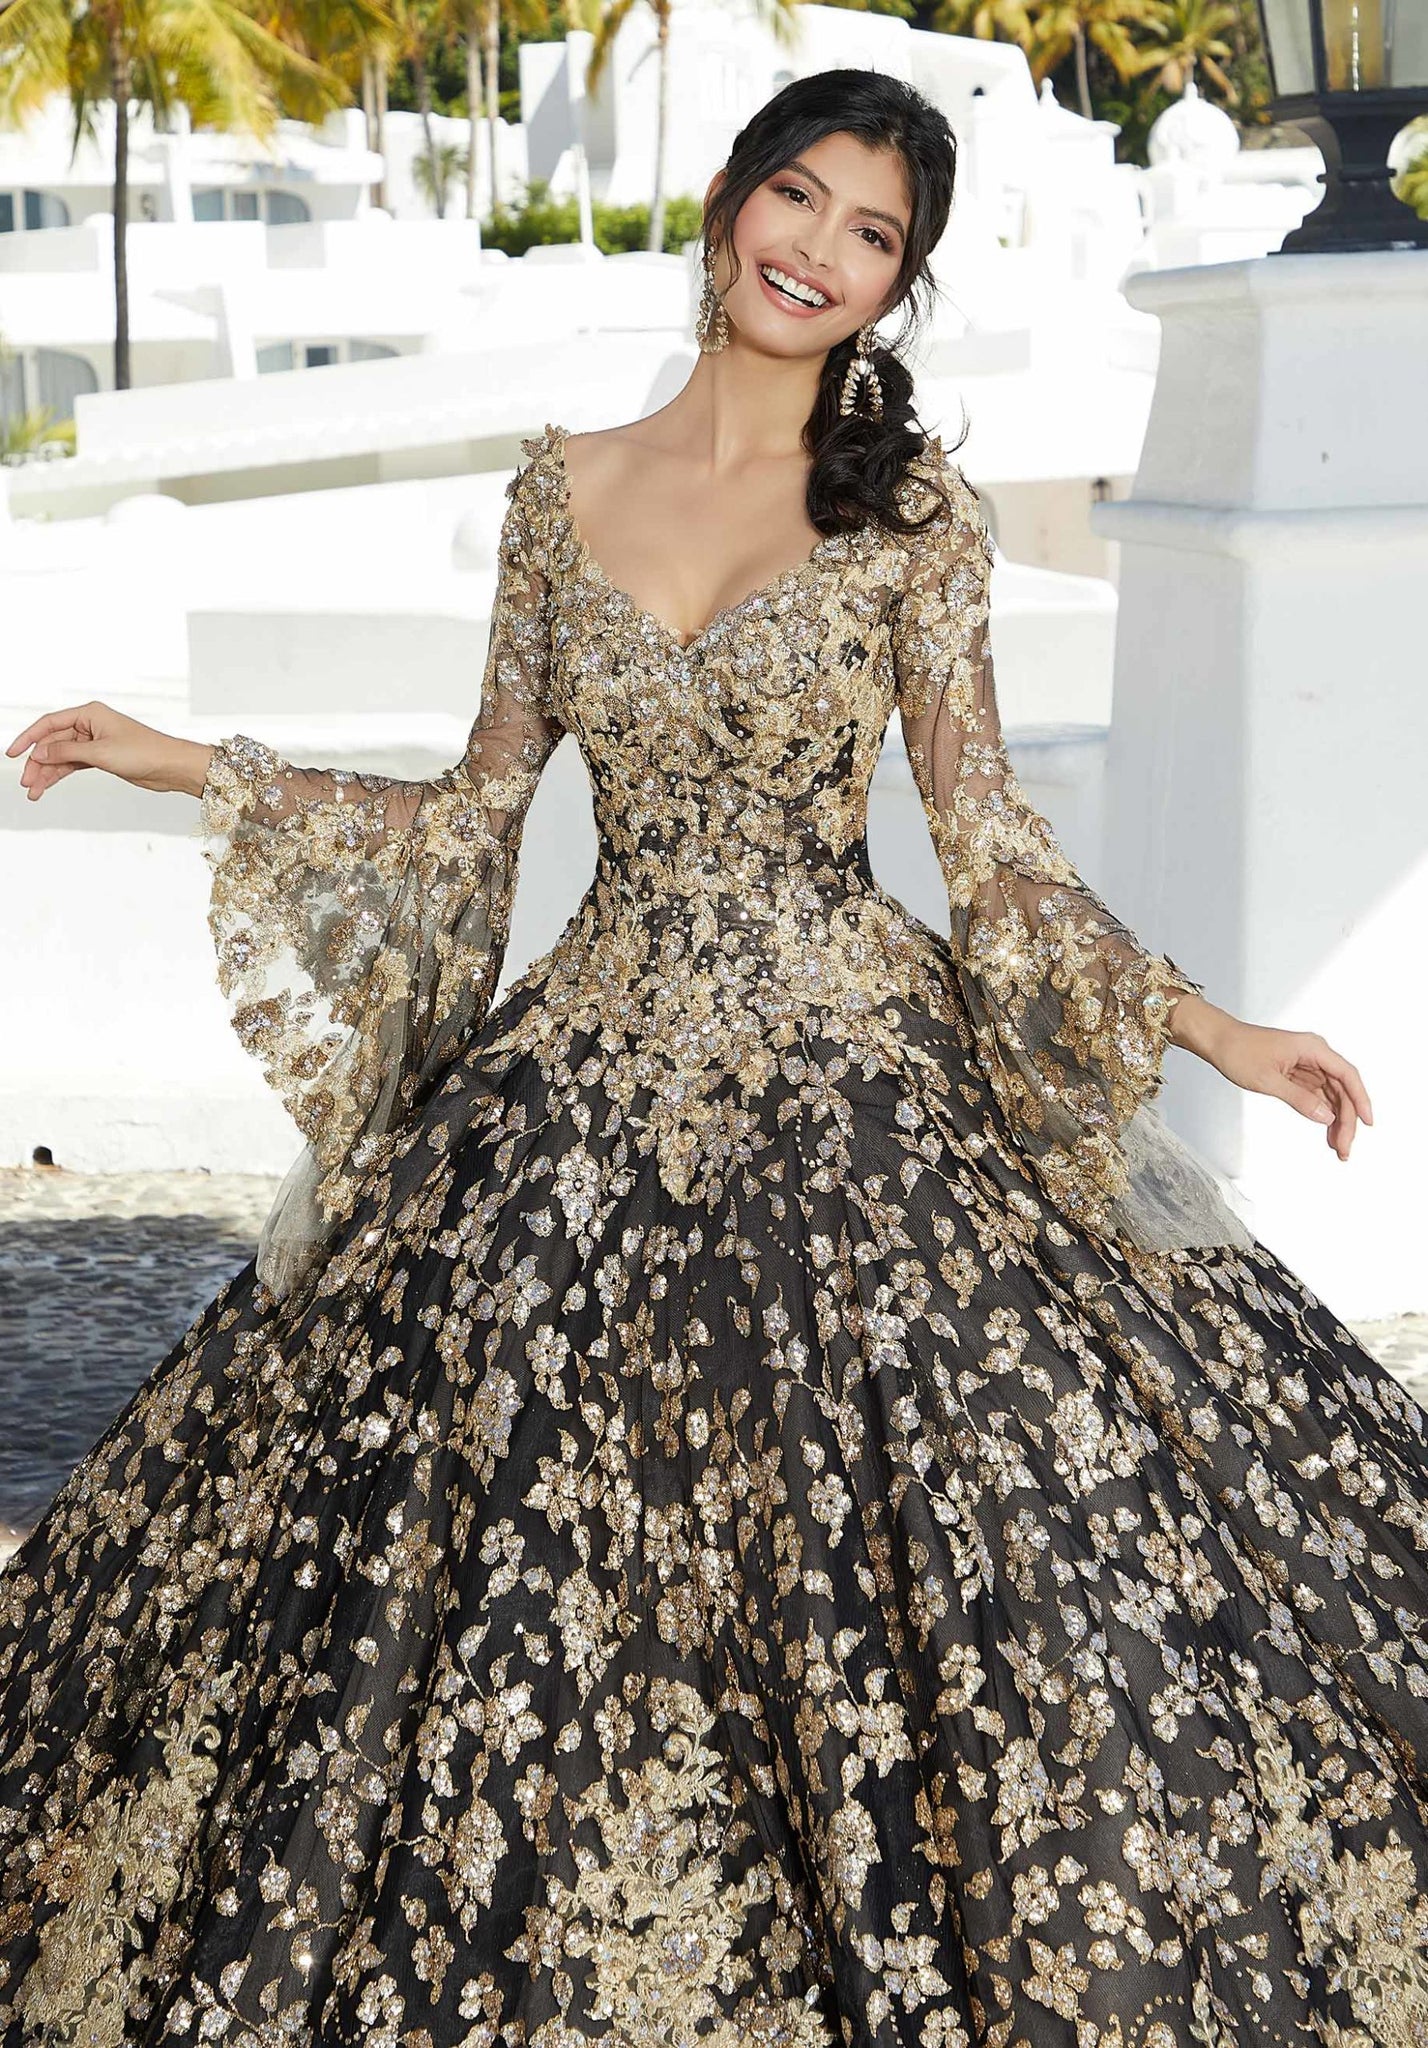 Floral Patterned Sequin Glitter Tulle Quinceañera Dress